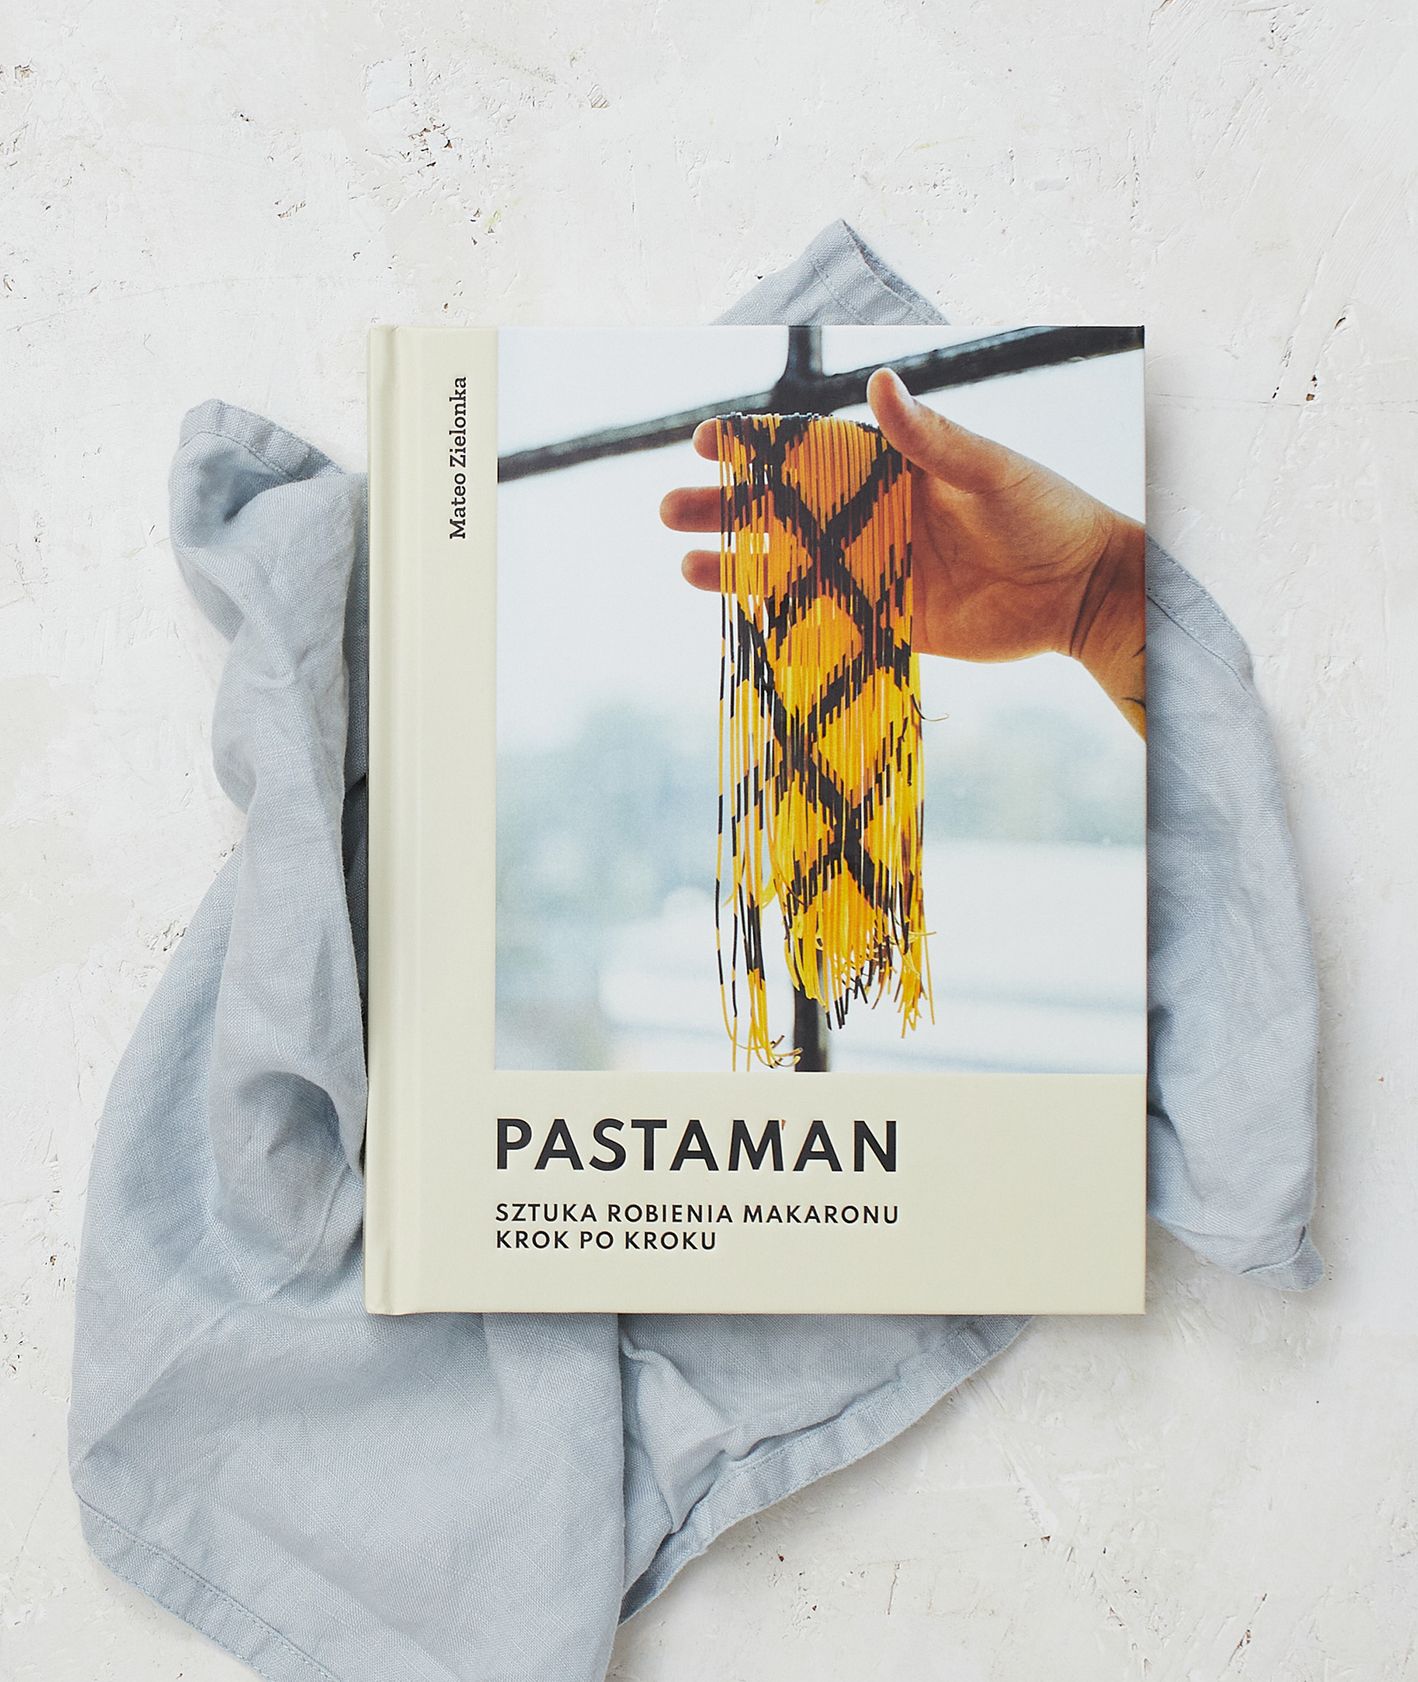 Okładka książki "Pastaman" Mateo Zielonka (fot. Paulina Czyżewska)